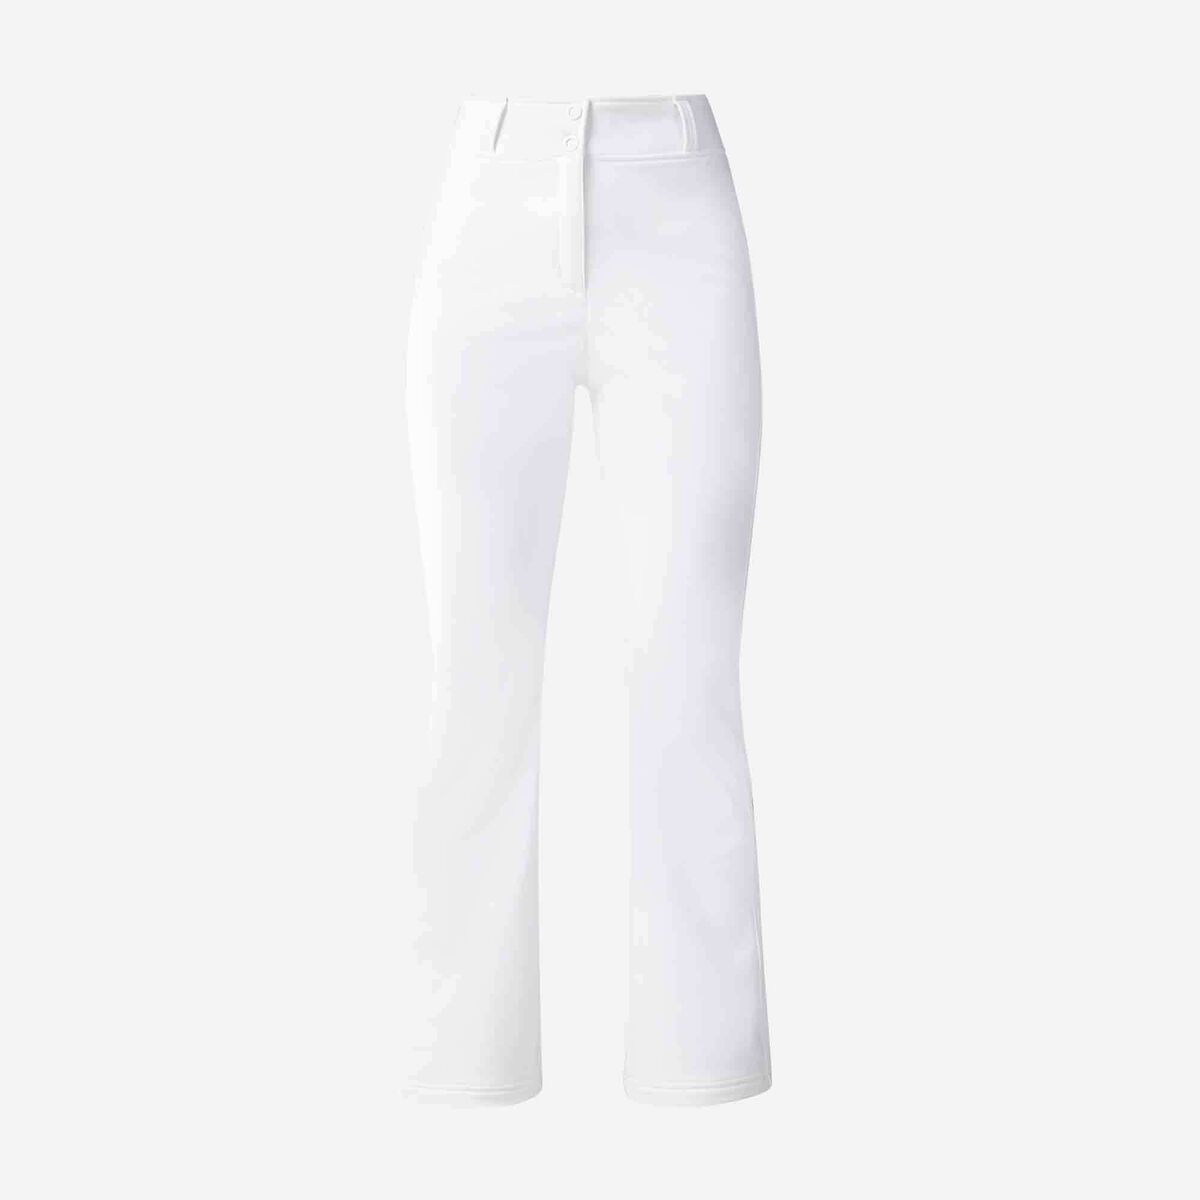 Rossignol Women's Soft Shell Ski pants, Pants Women, White